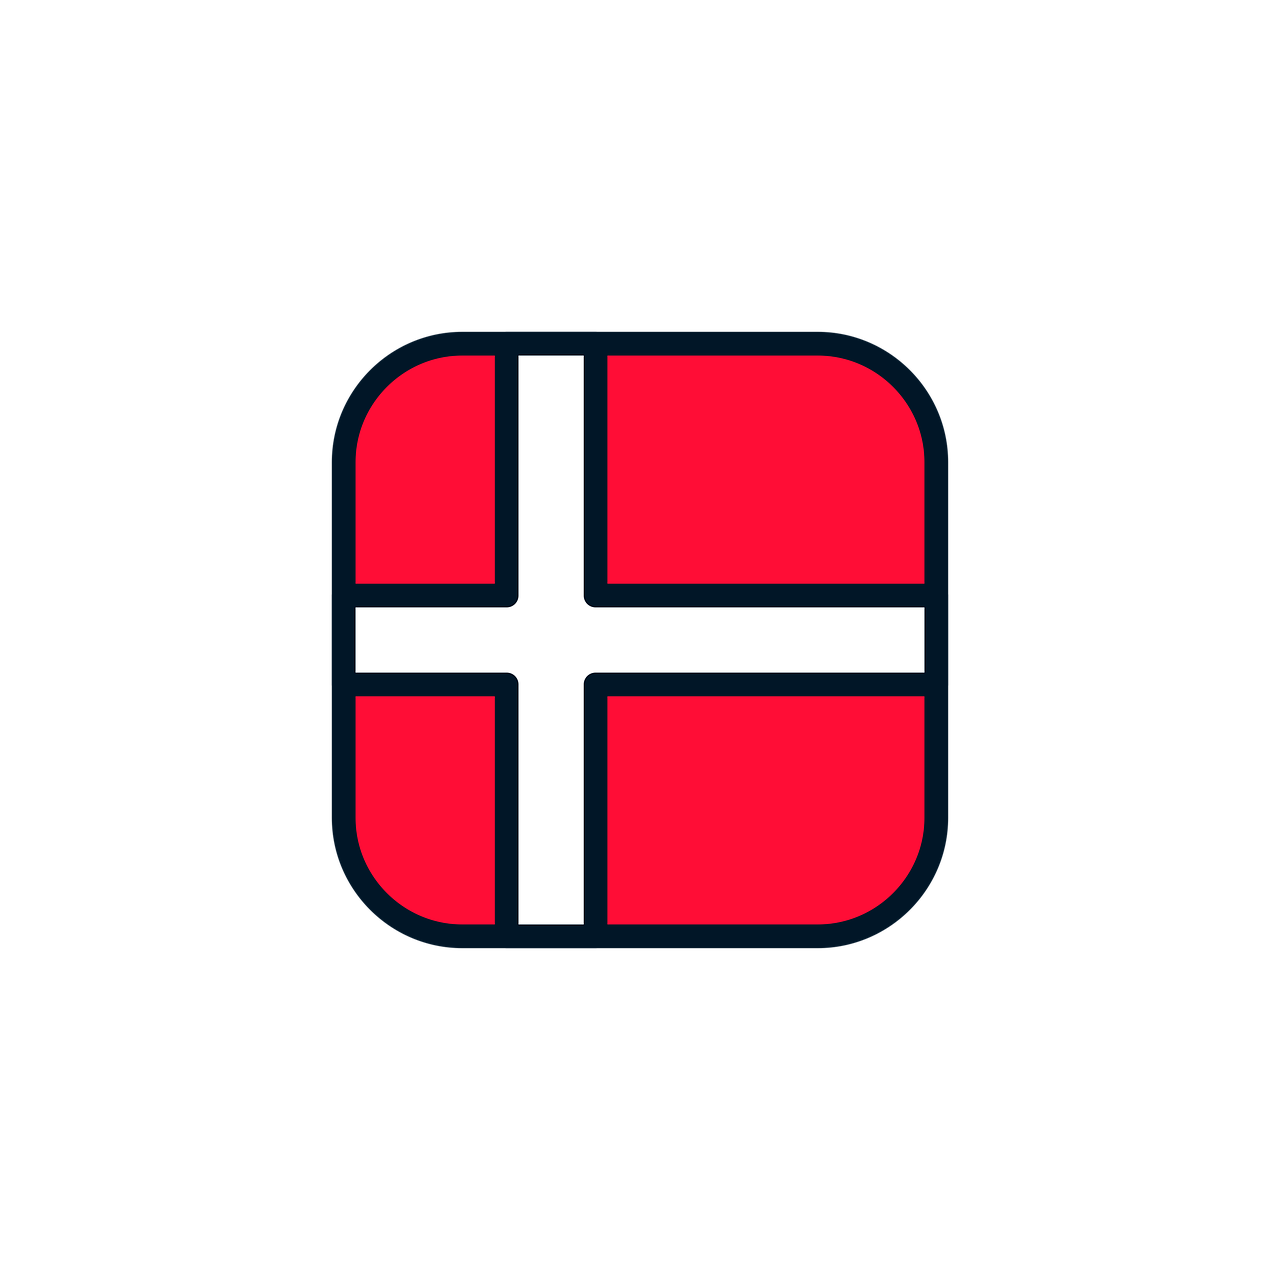 Denmark, denmark icon, denmark flag, world cup russia, football - free image from needpix.com